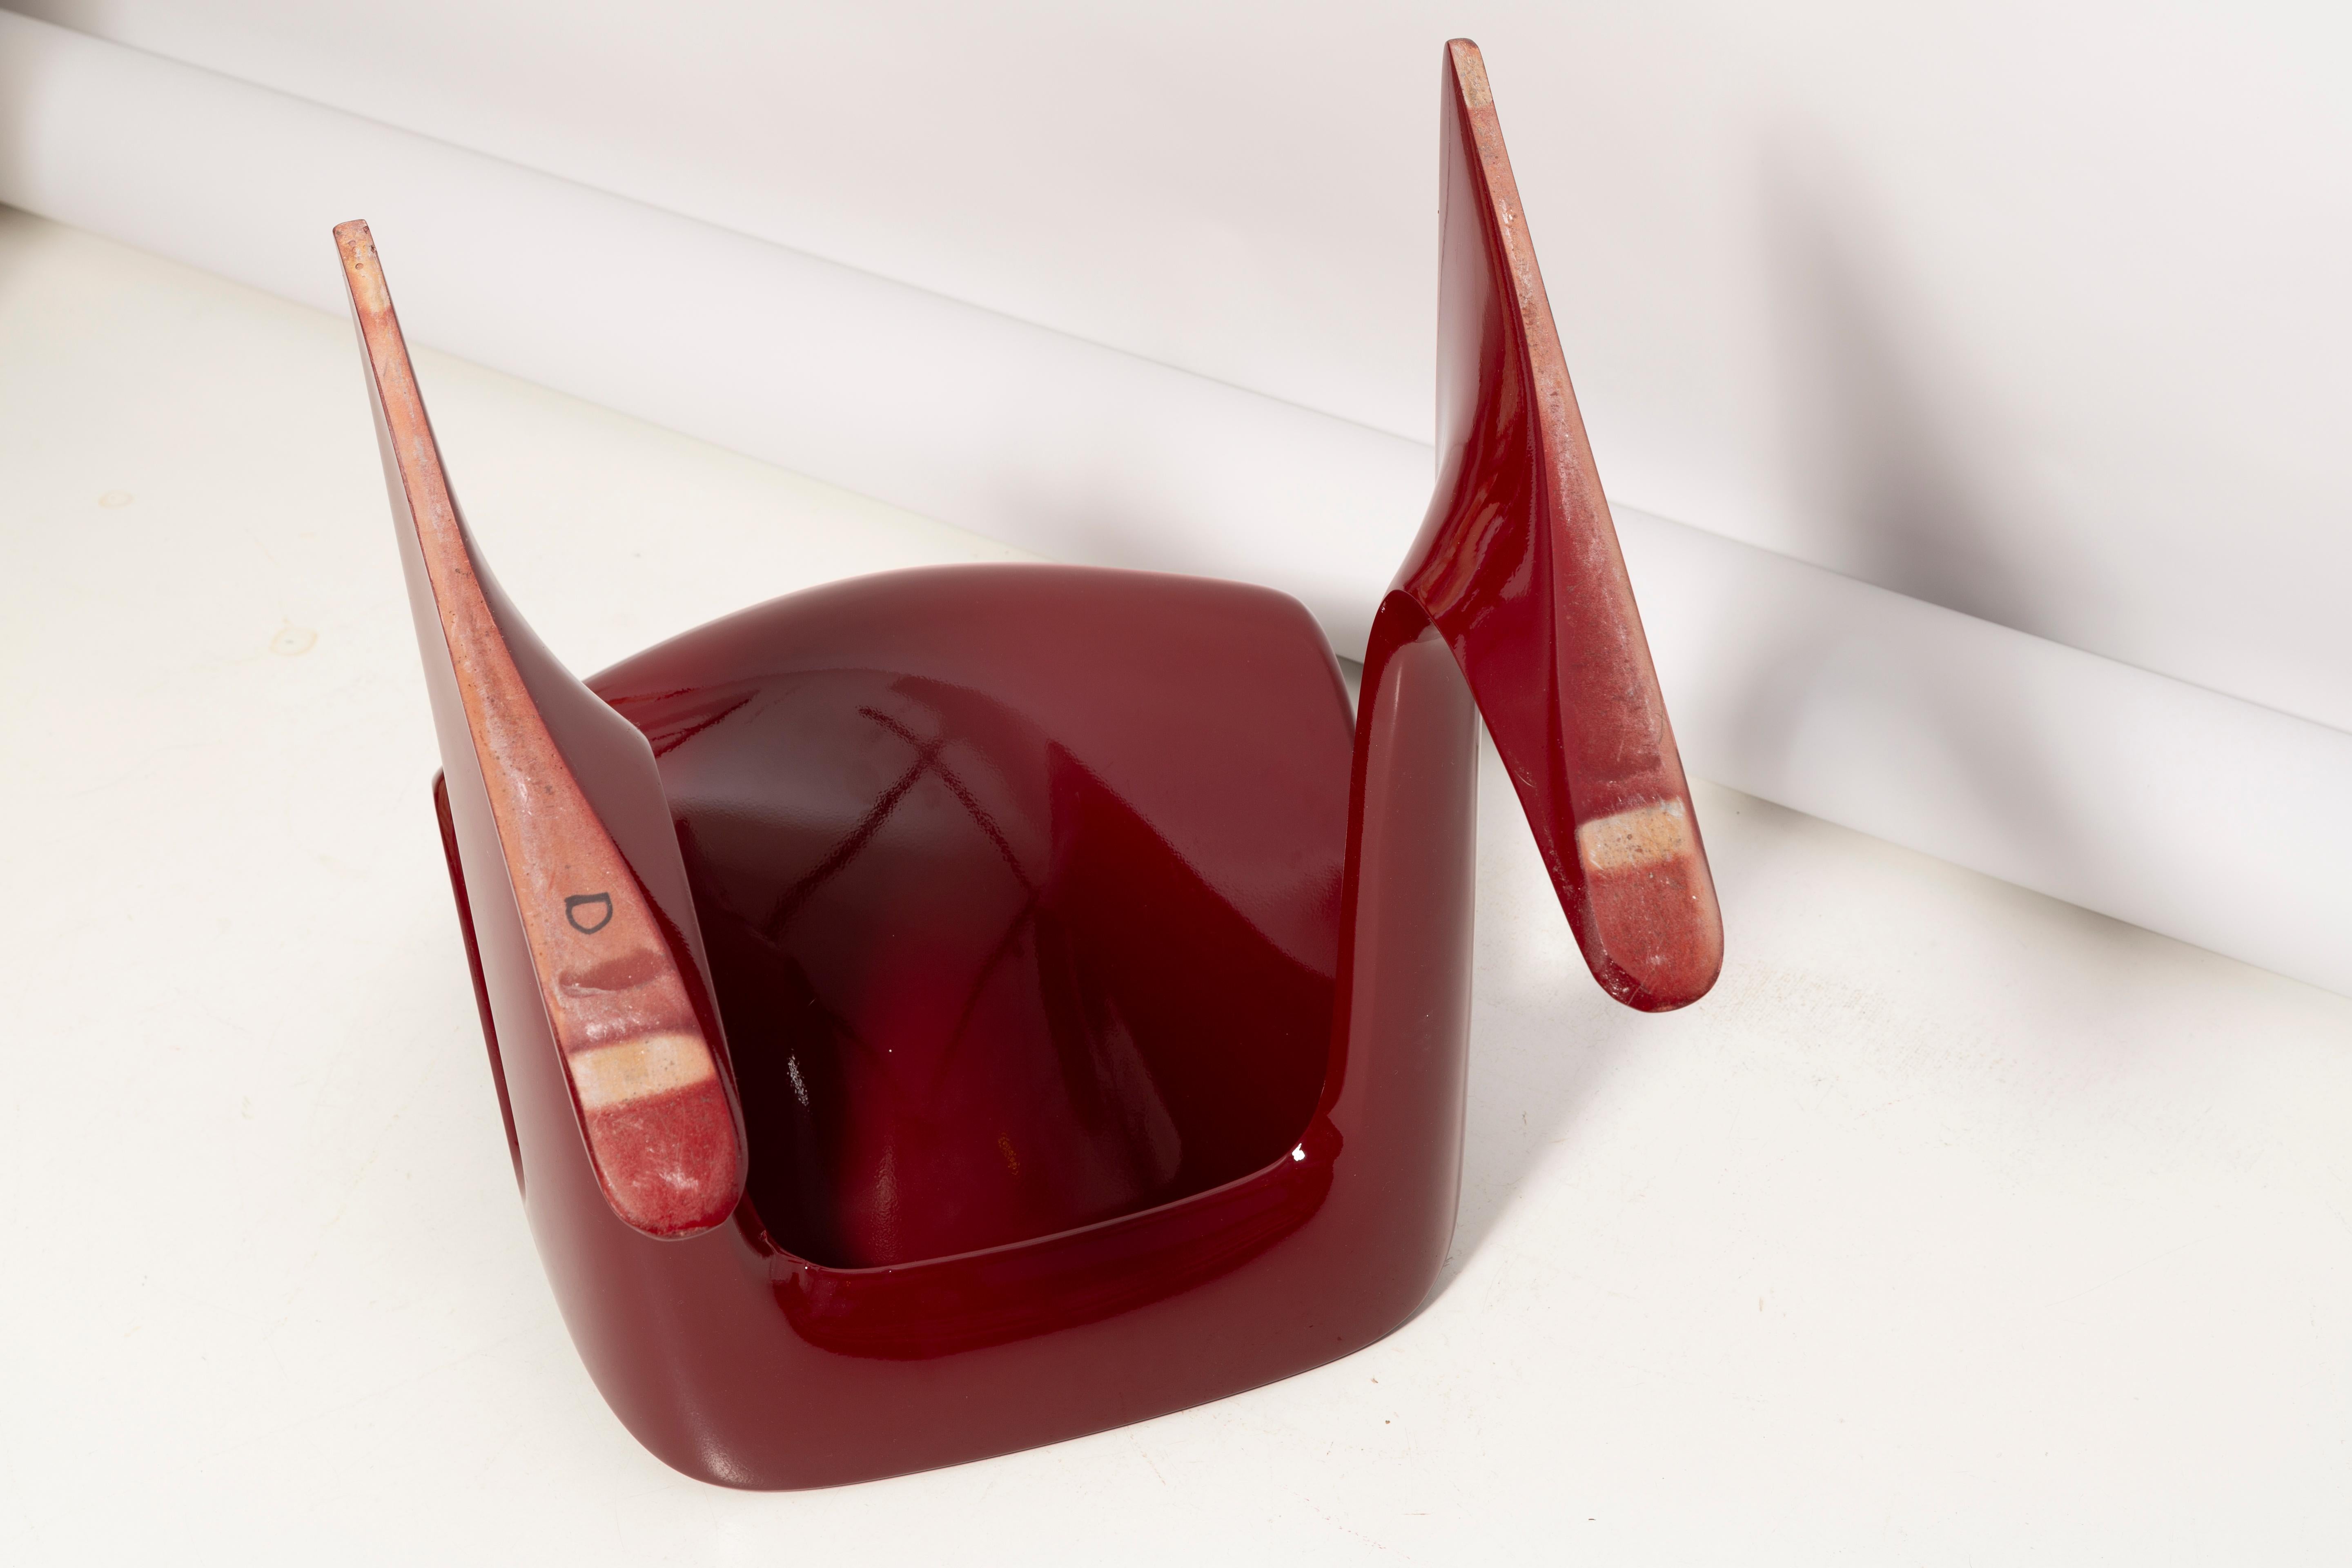 Dark Red Wine Kangaroo Chair Designed by Ernst Moeckl, Germany, 1968 For Sale 4